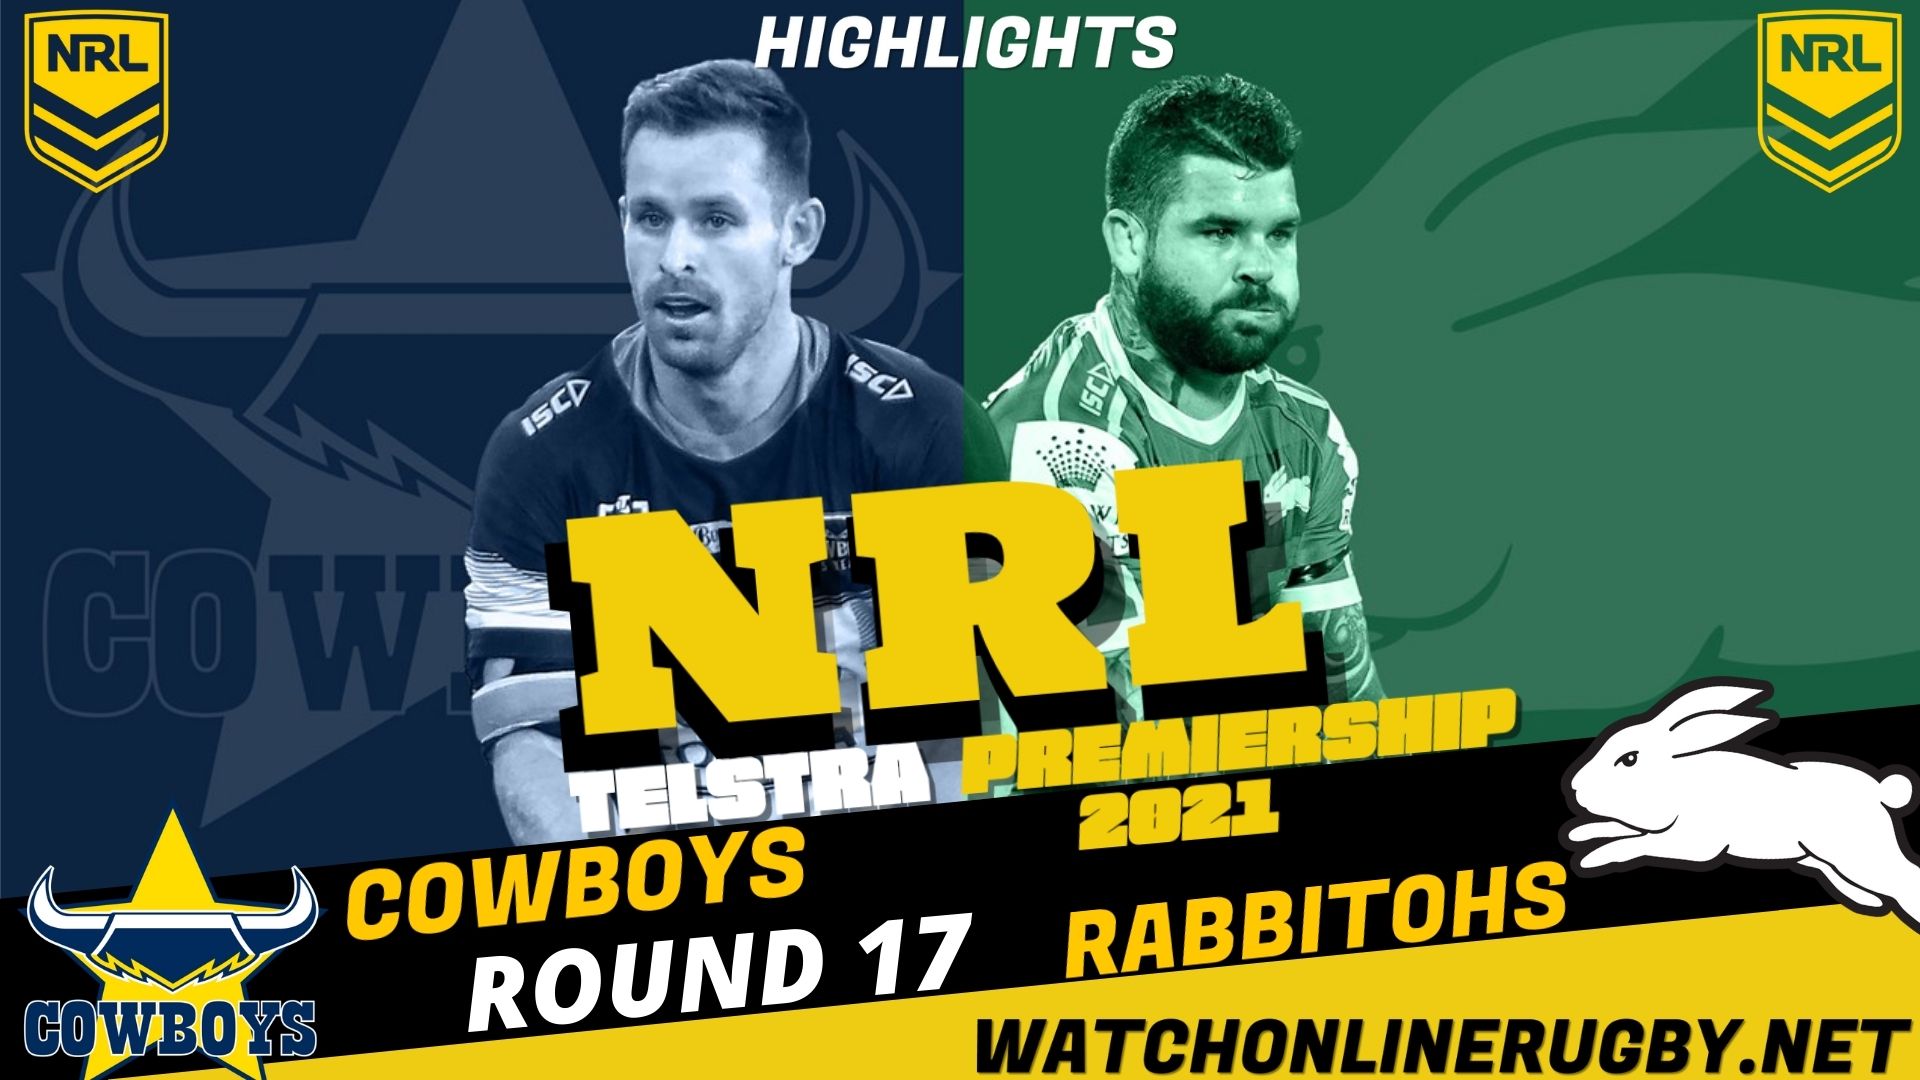 Rabbitohs Vs Cowboys Highlights RD 17 NRL Rugby